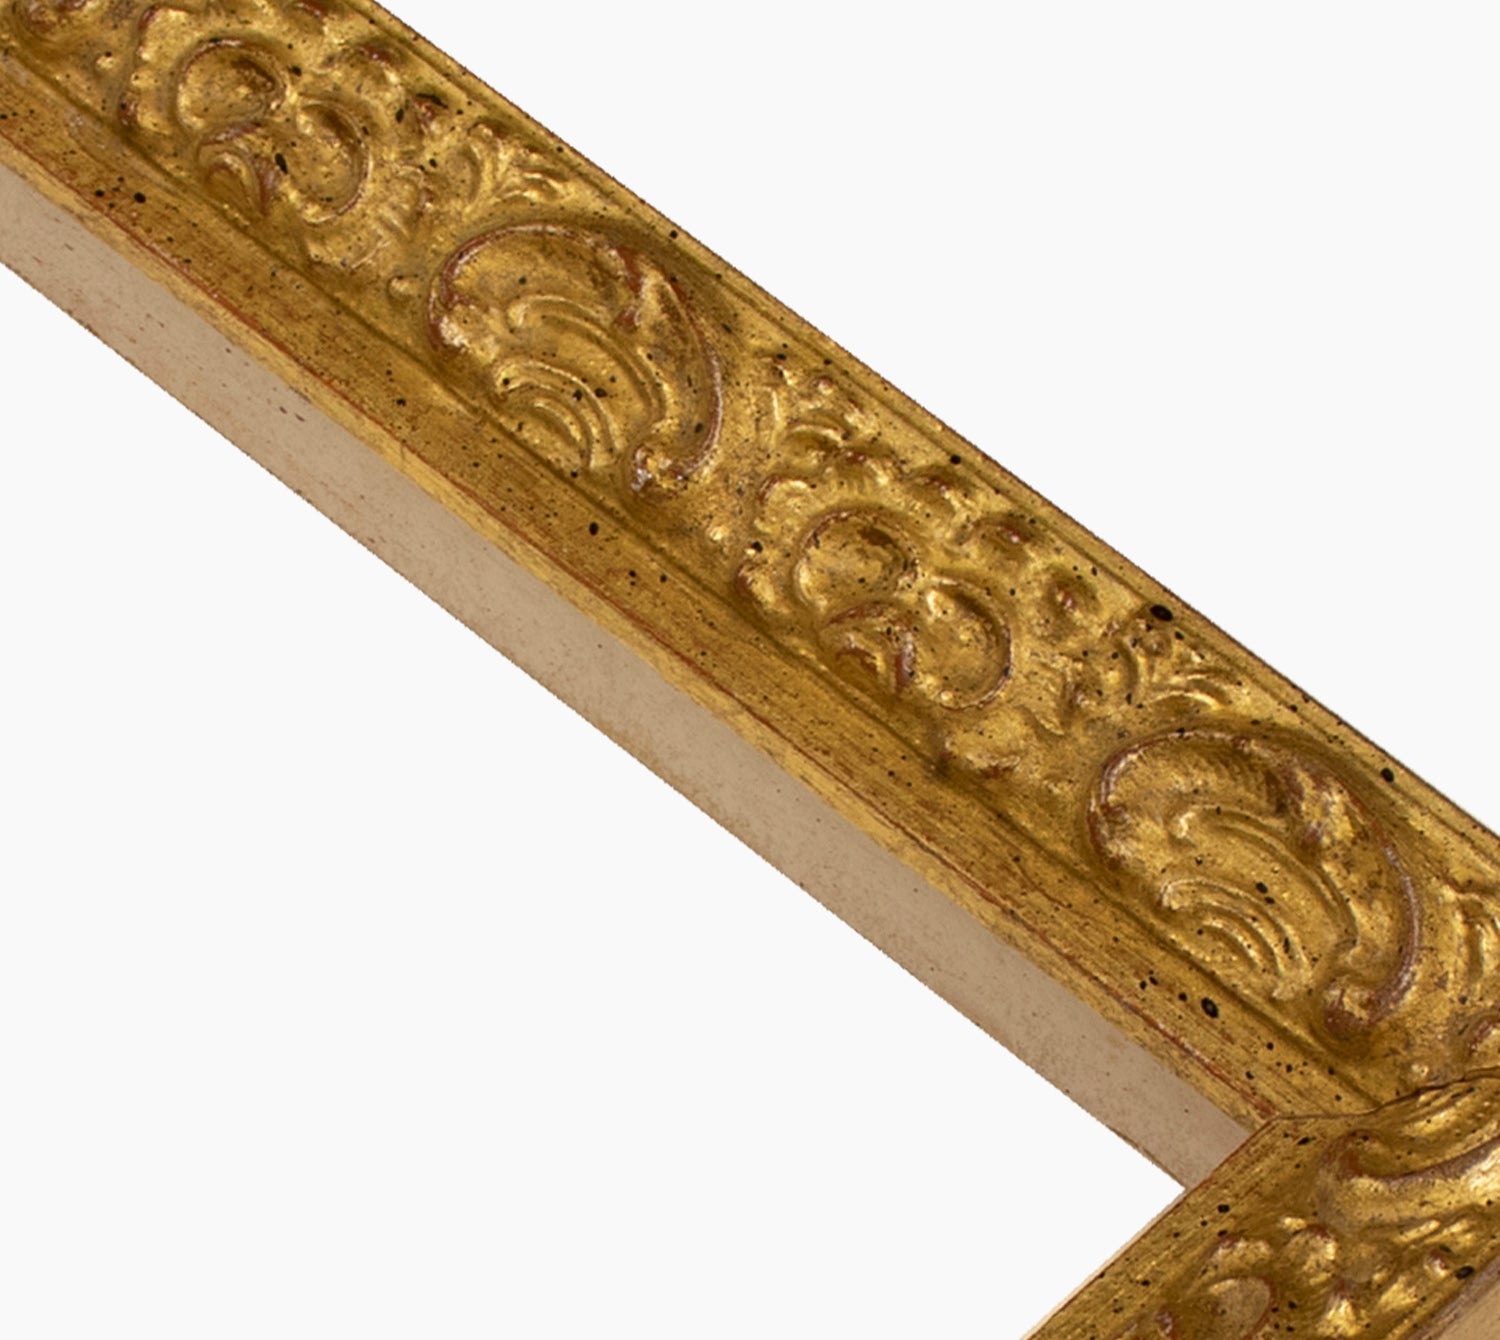 426.010 cadre en bois à la feuille d'or mesure de profil 26x42 mm Lombarda cornici S.n.c.